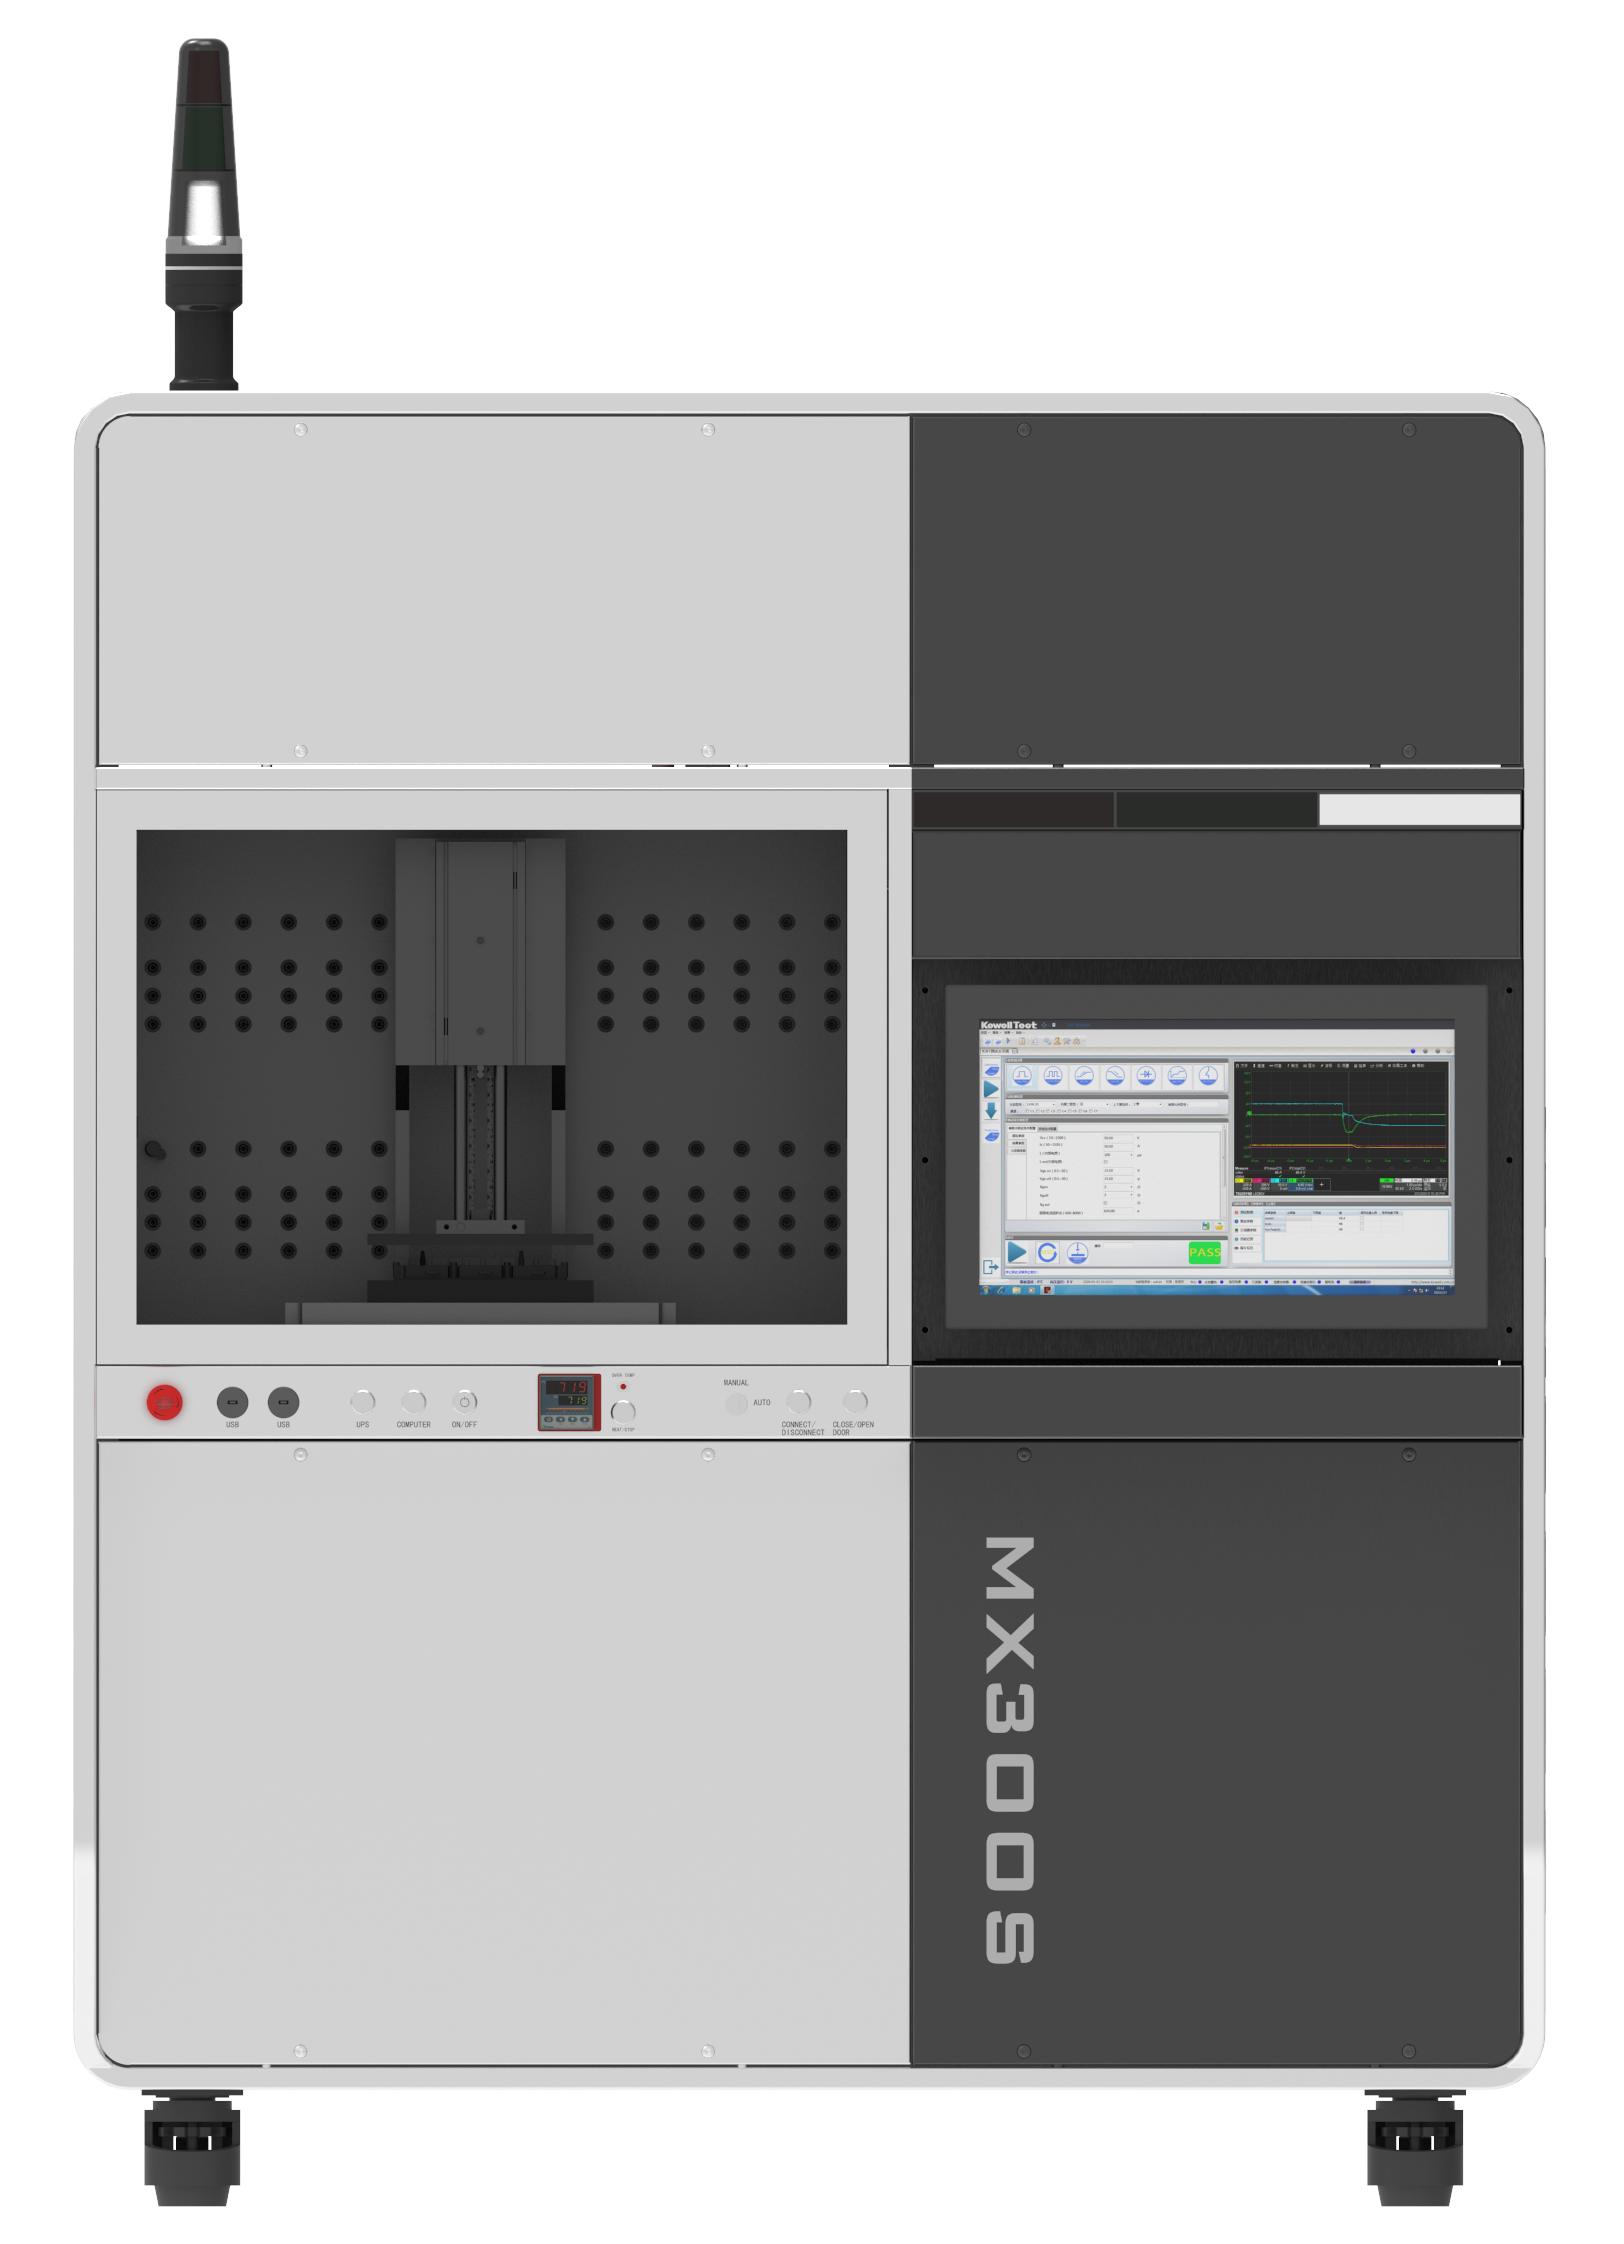 2.3.2 MX300S Series IGBT Static Test System